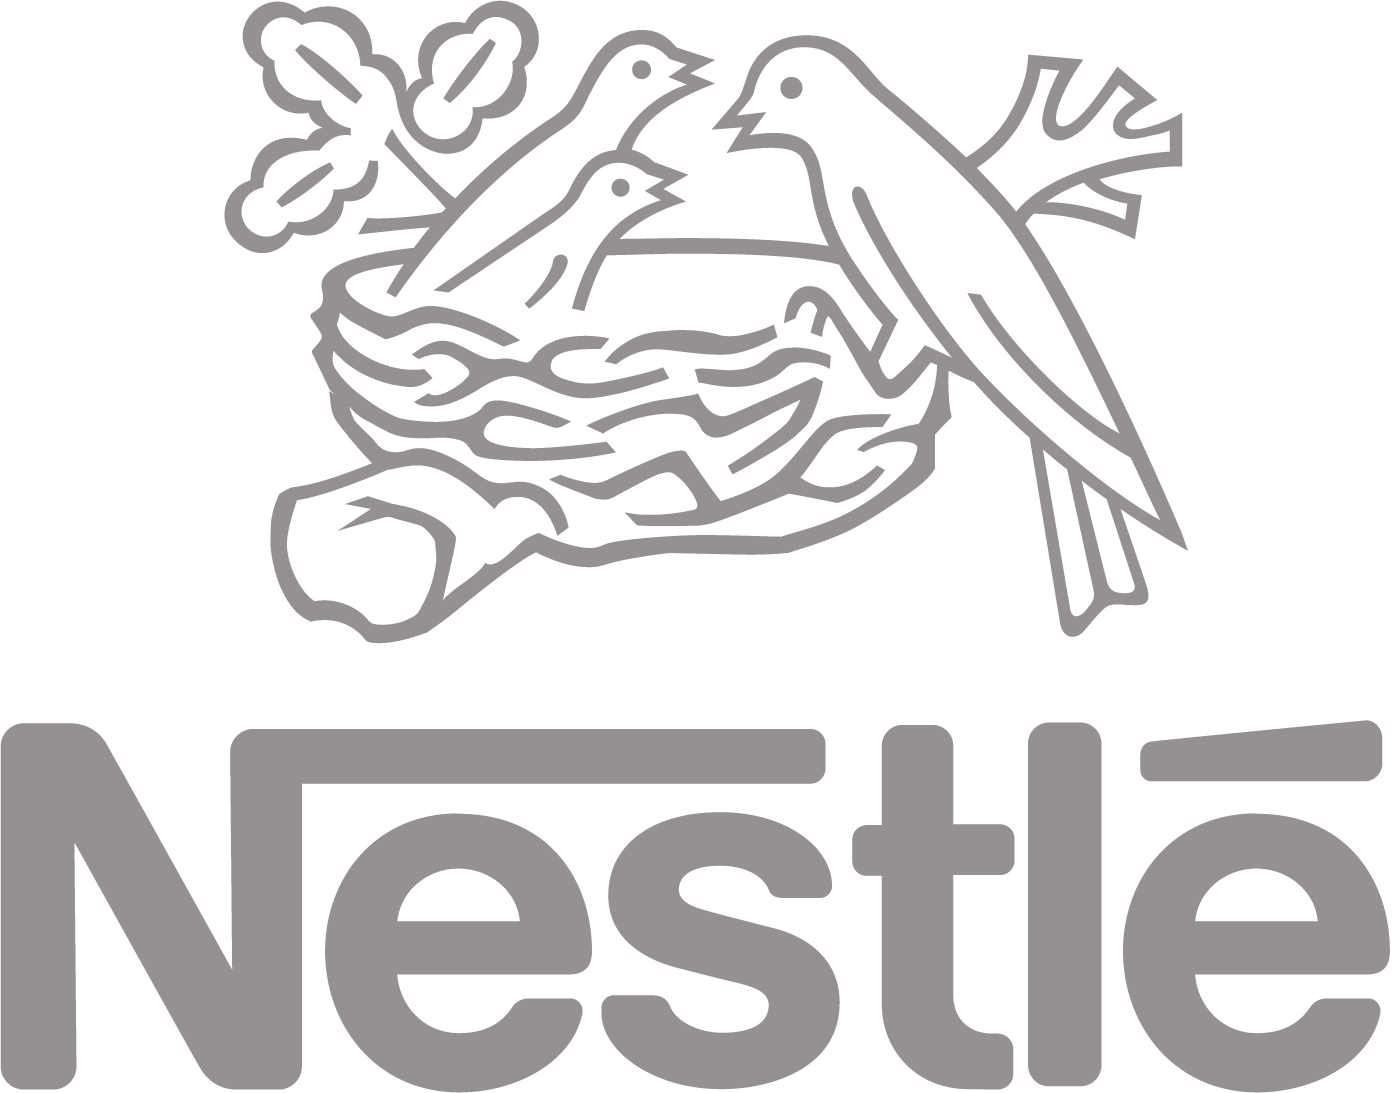 Logo-nestle.png